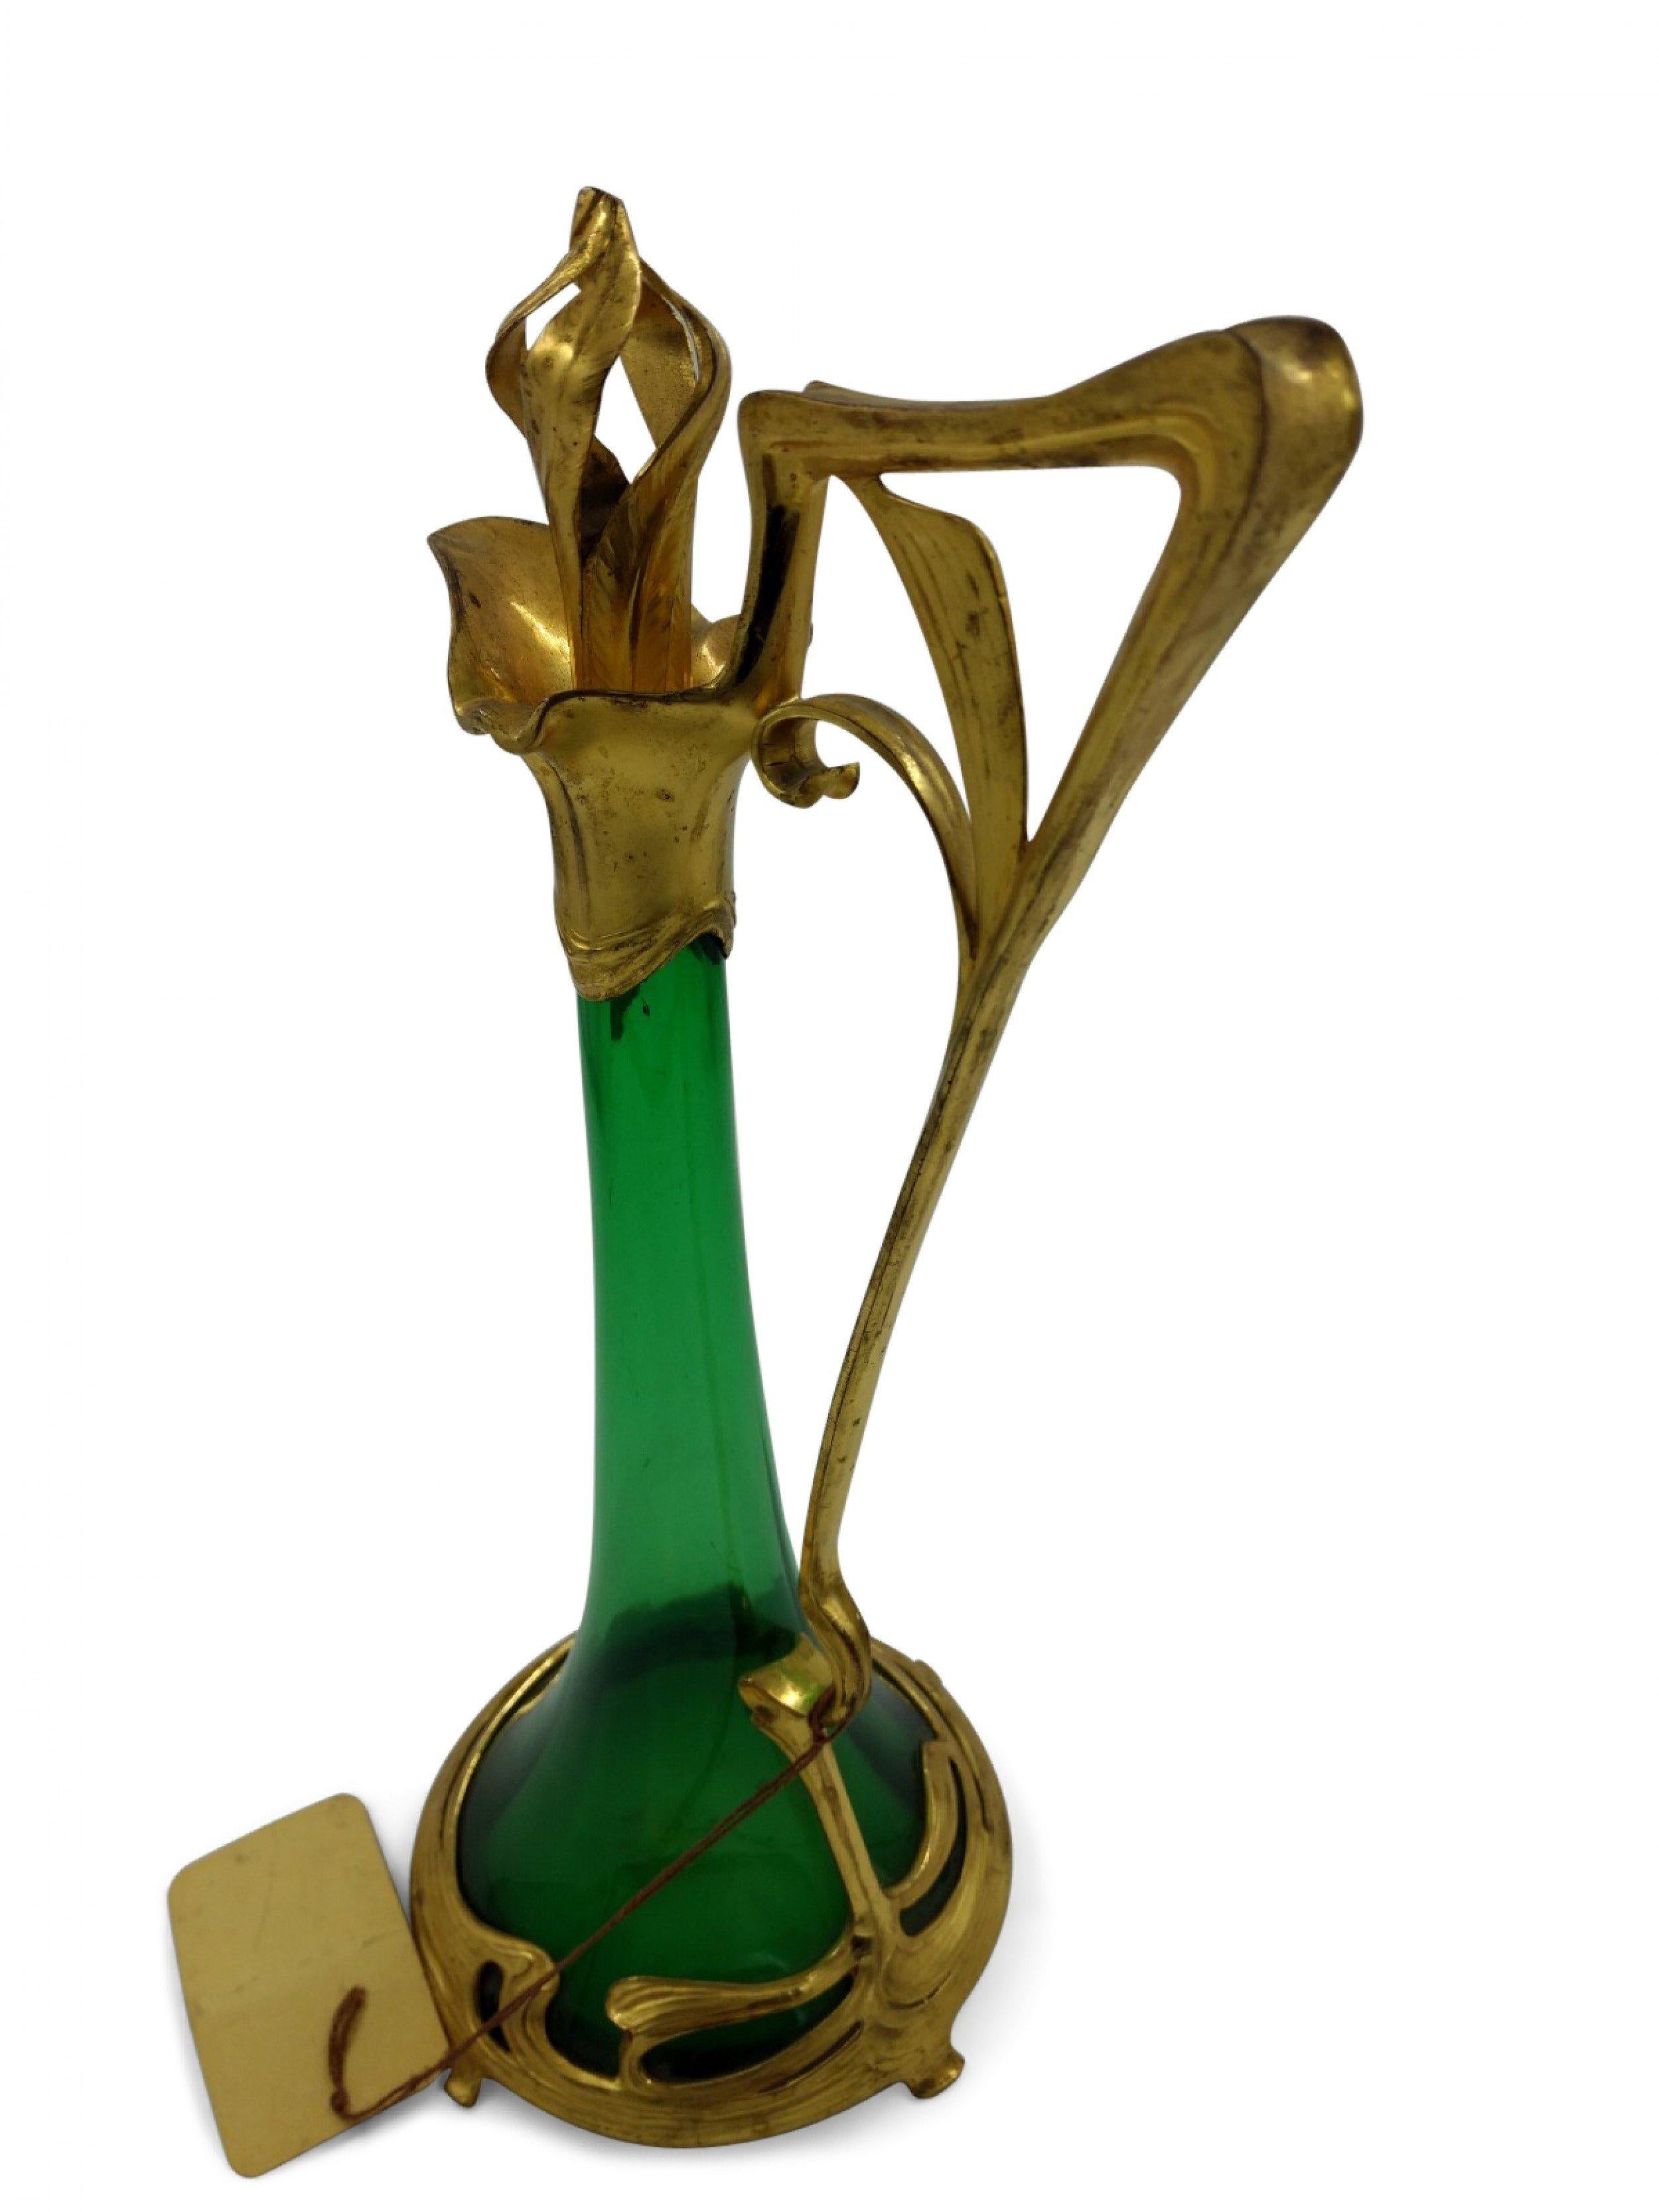 French Art Nouveau green glass decanter with bronze dore trim.